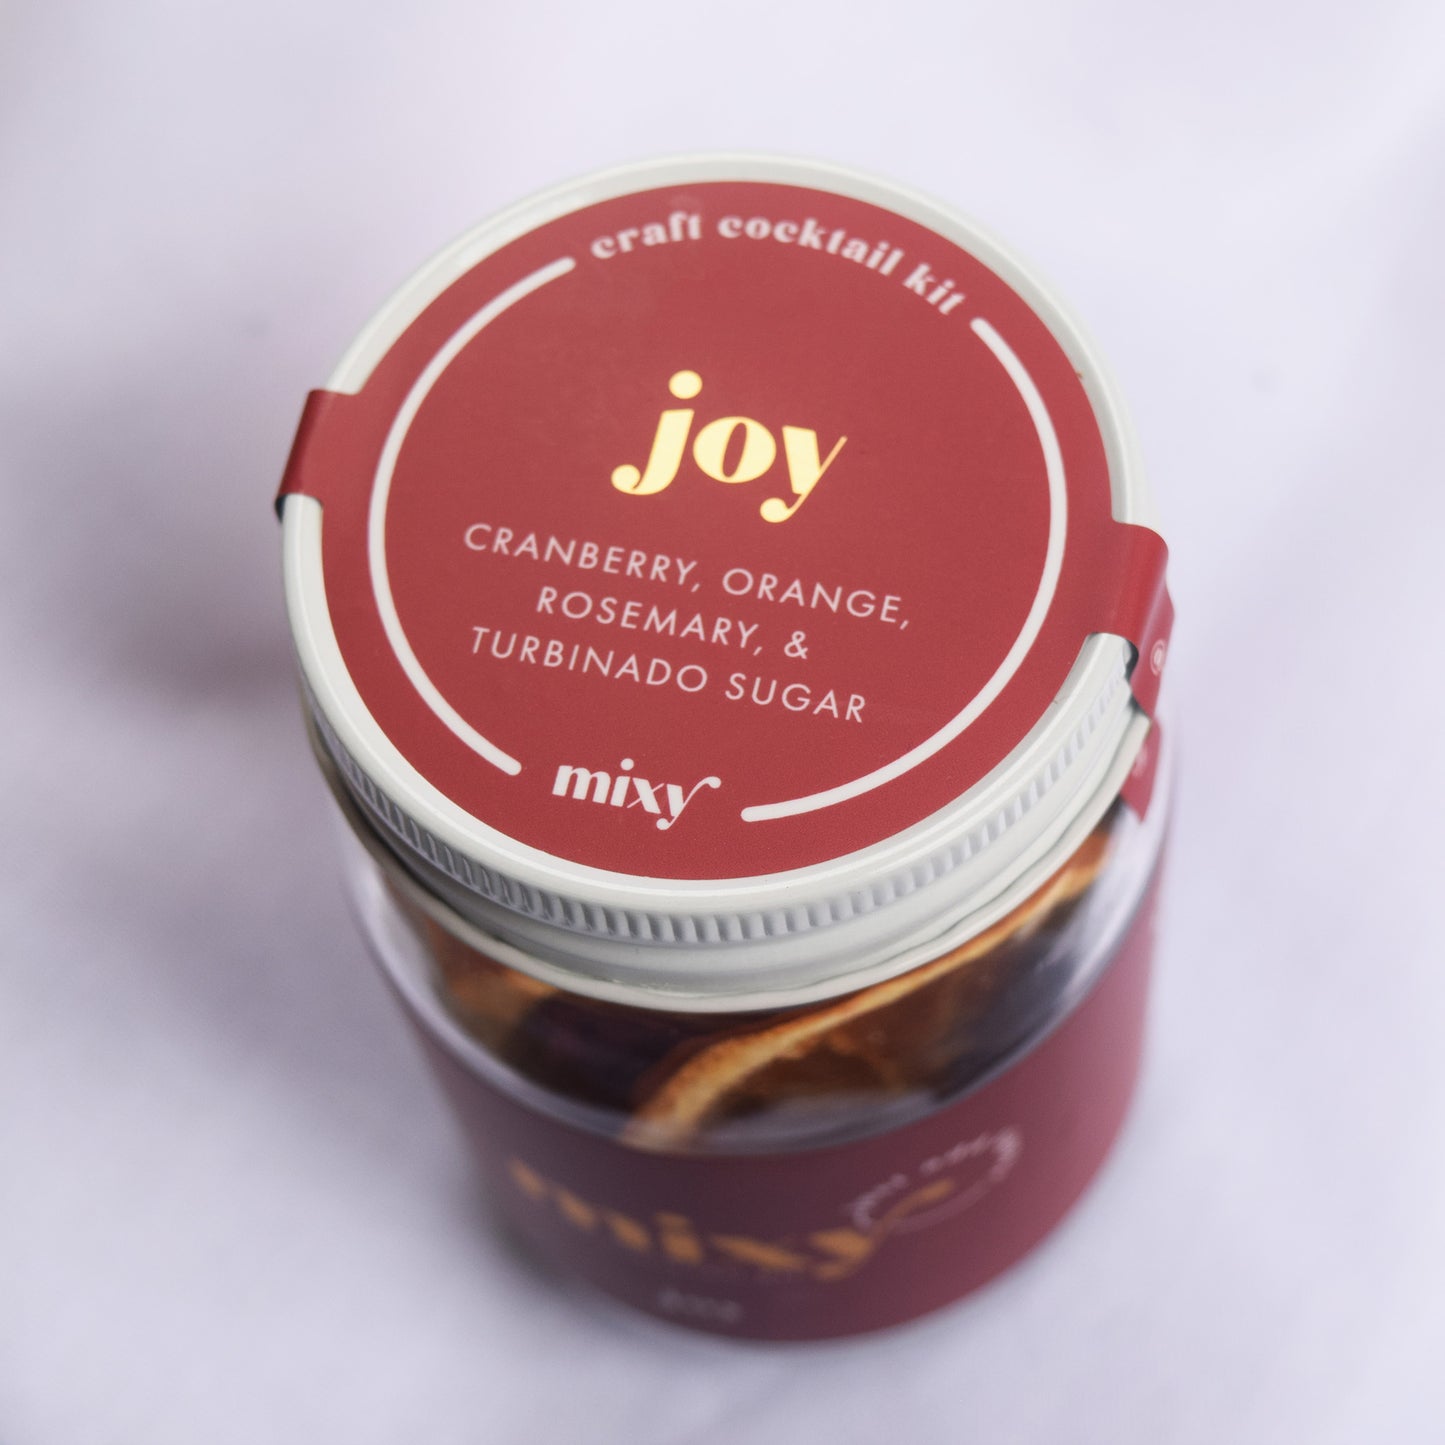 Joy Holiday Craft Cocktail Kit